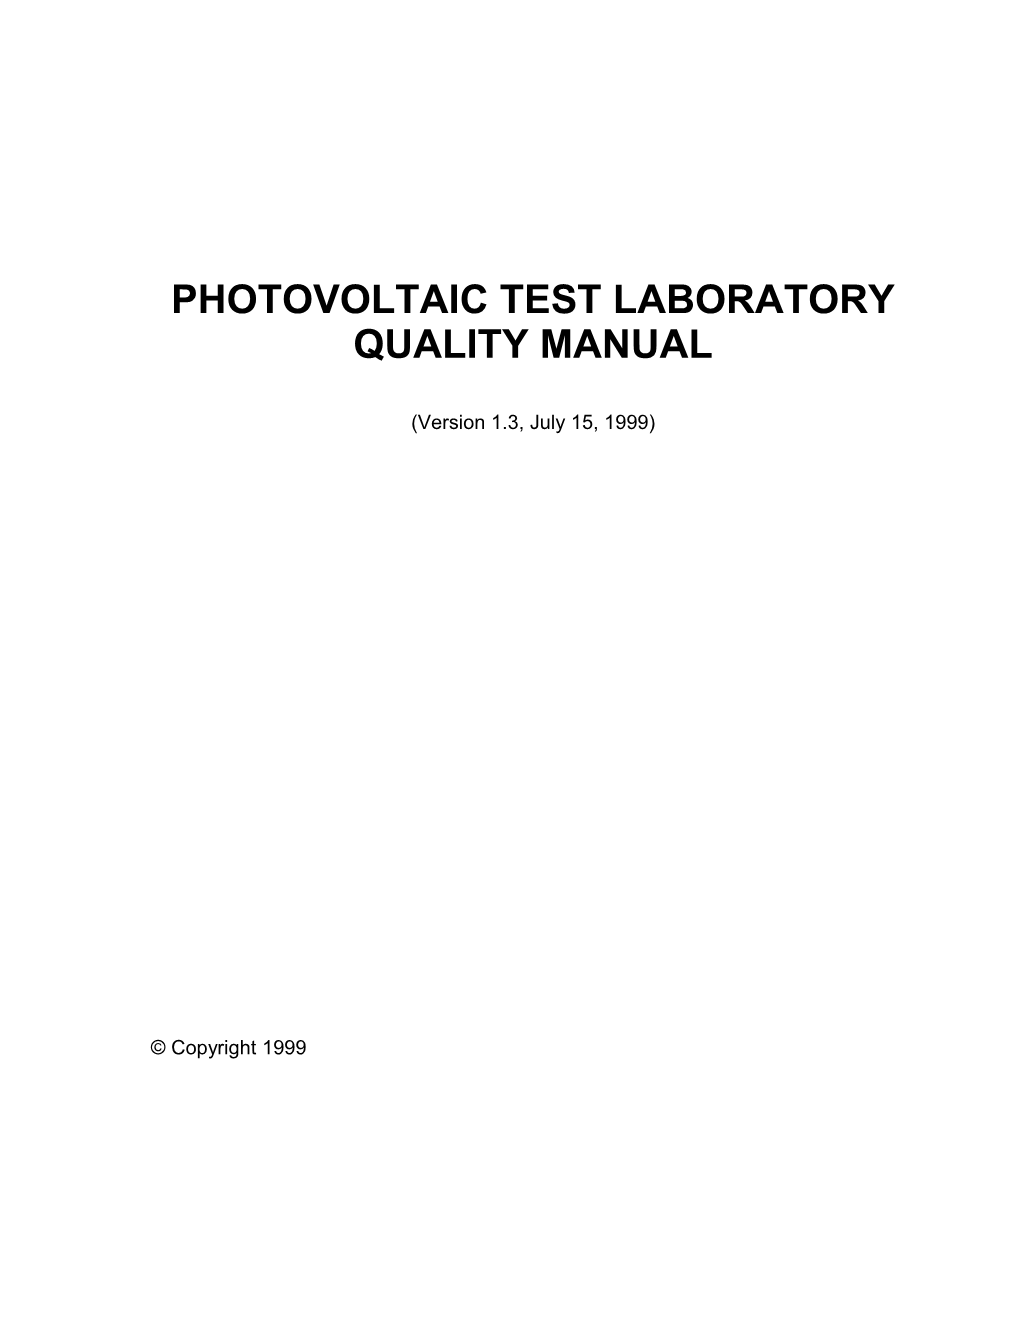 Photovoltaic Test Laboratory Quality Manual